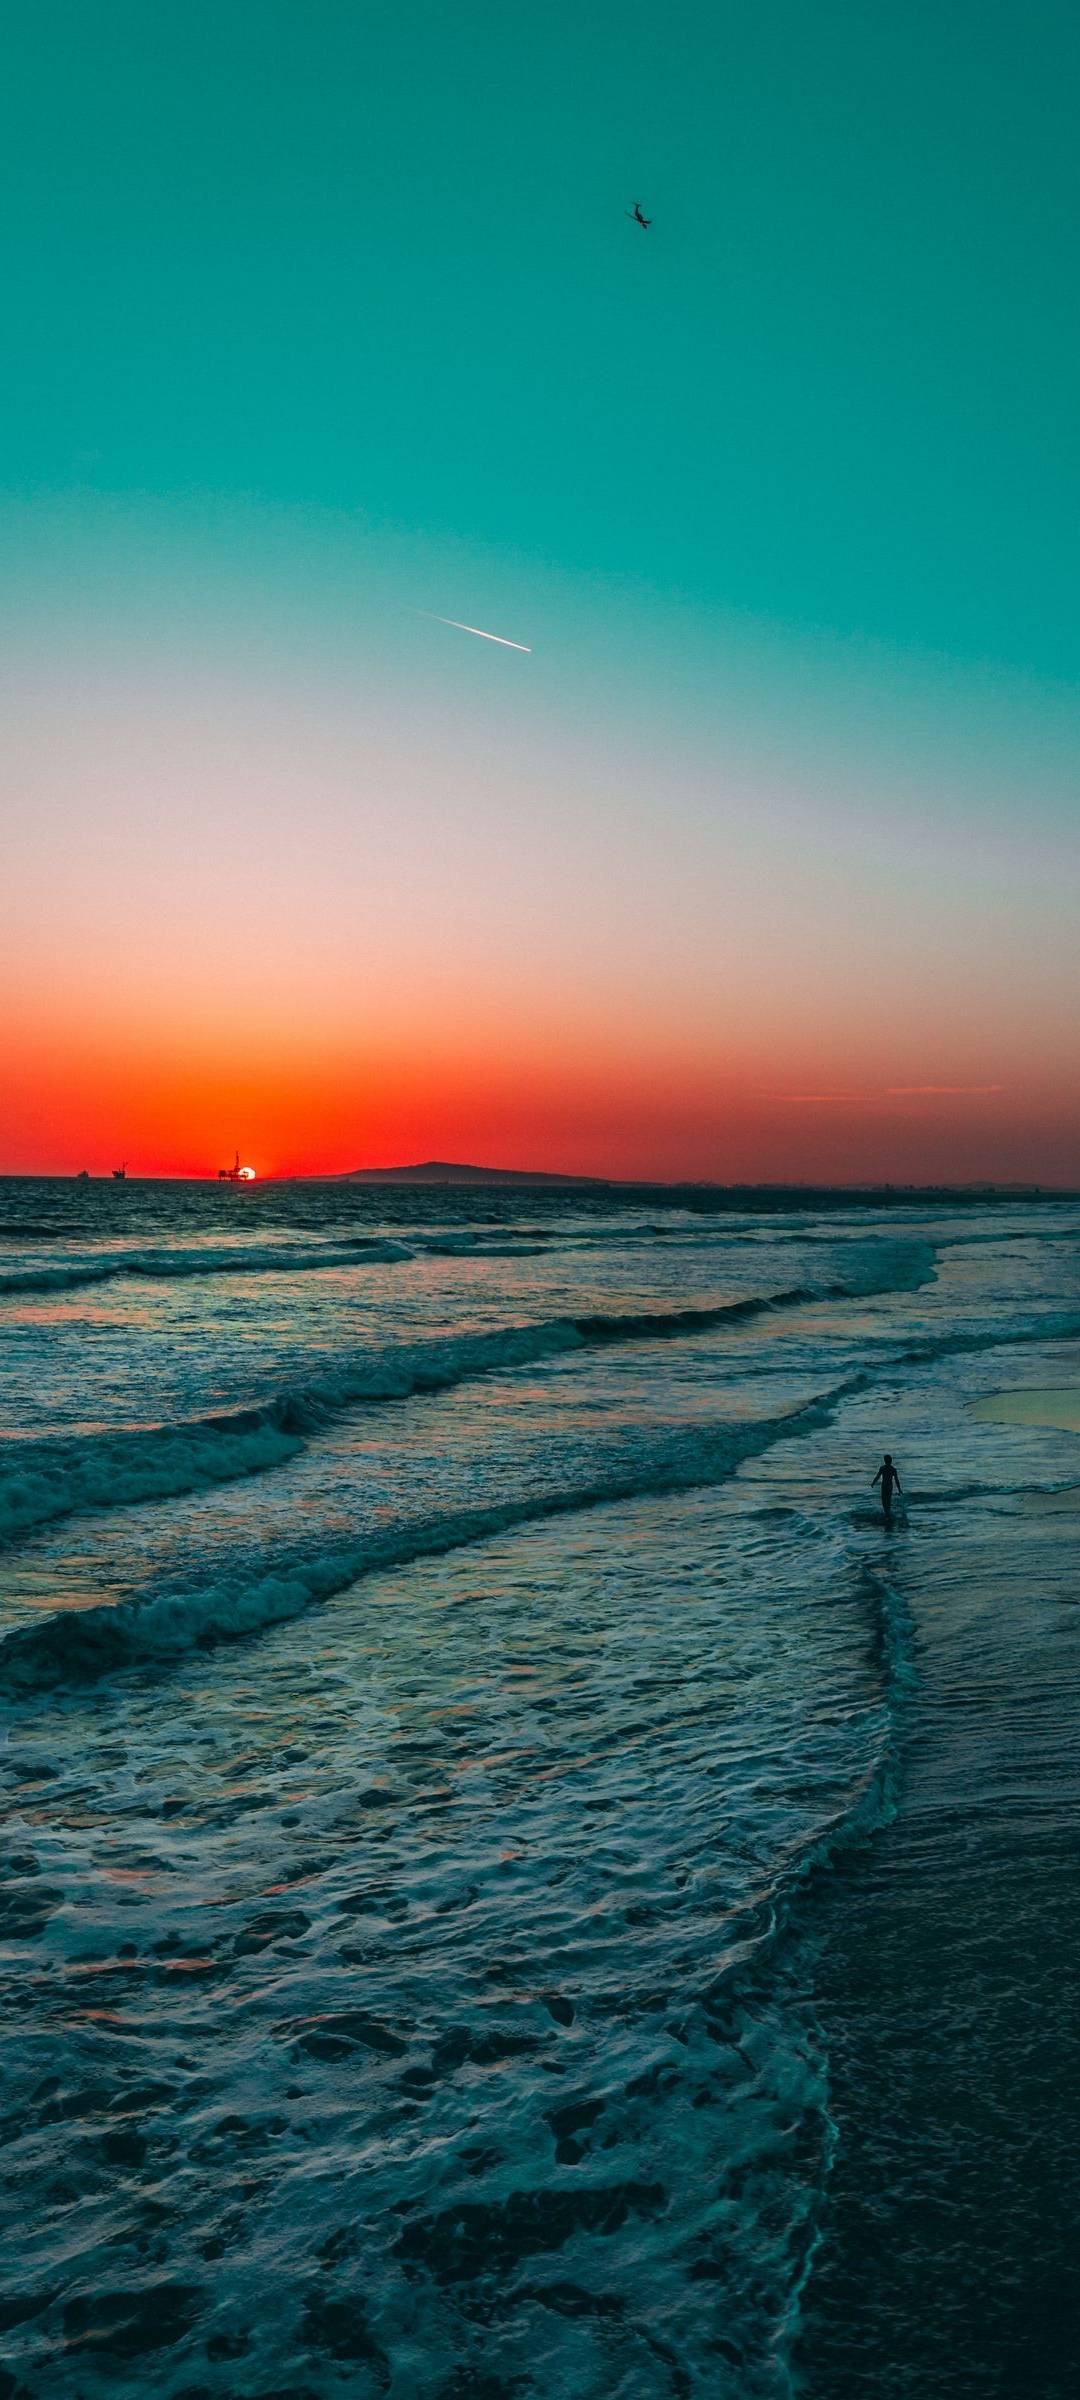 Beautiful Sunset View on Beach Wallpaper | HD Wallpapers